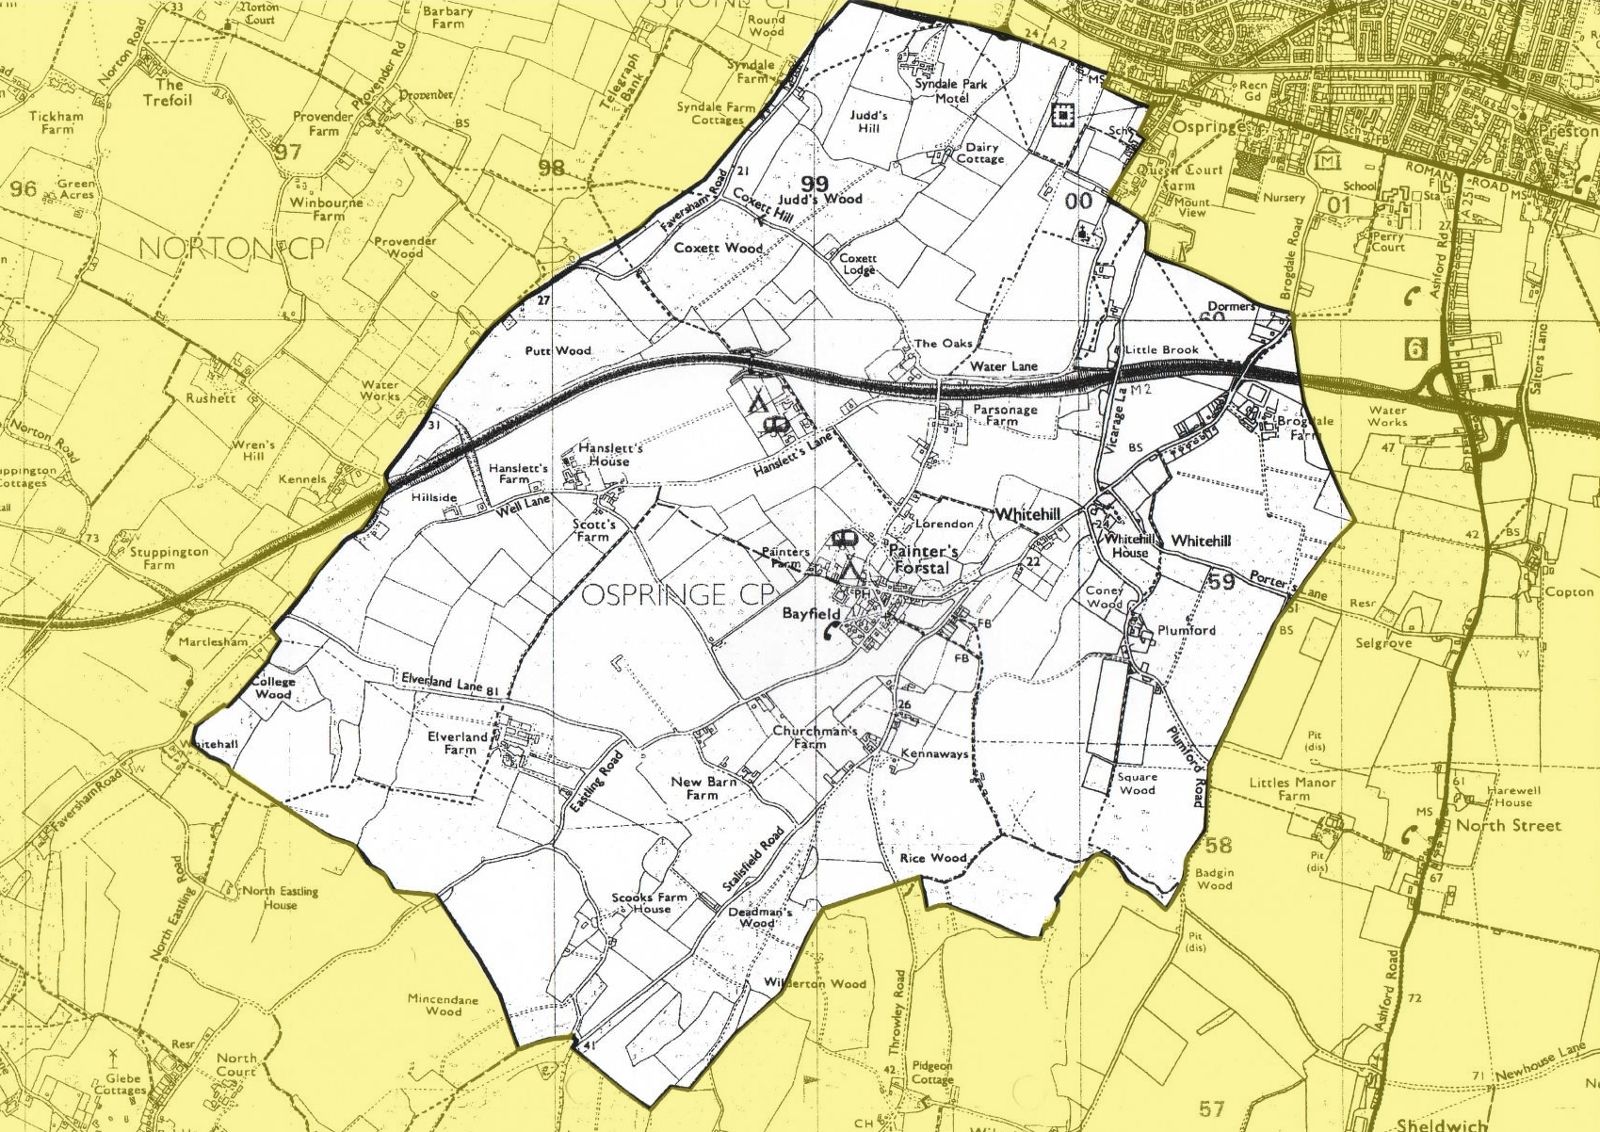 Ordnance Survey Map showing parish boundary